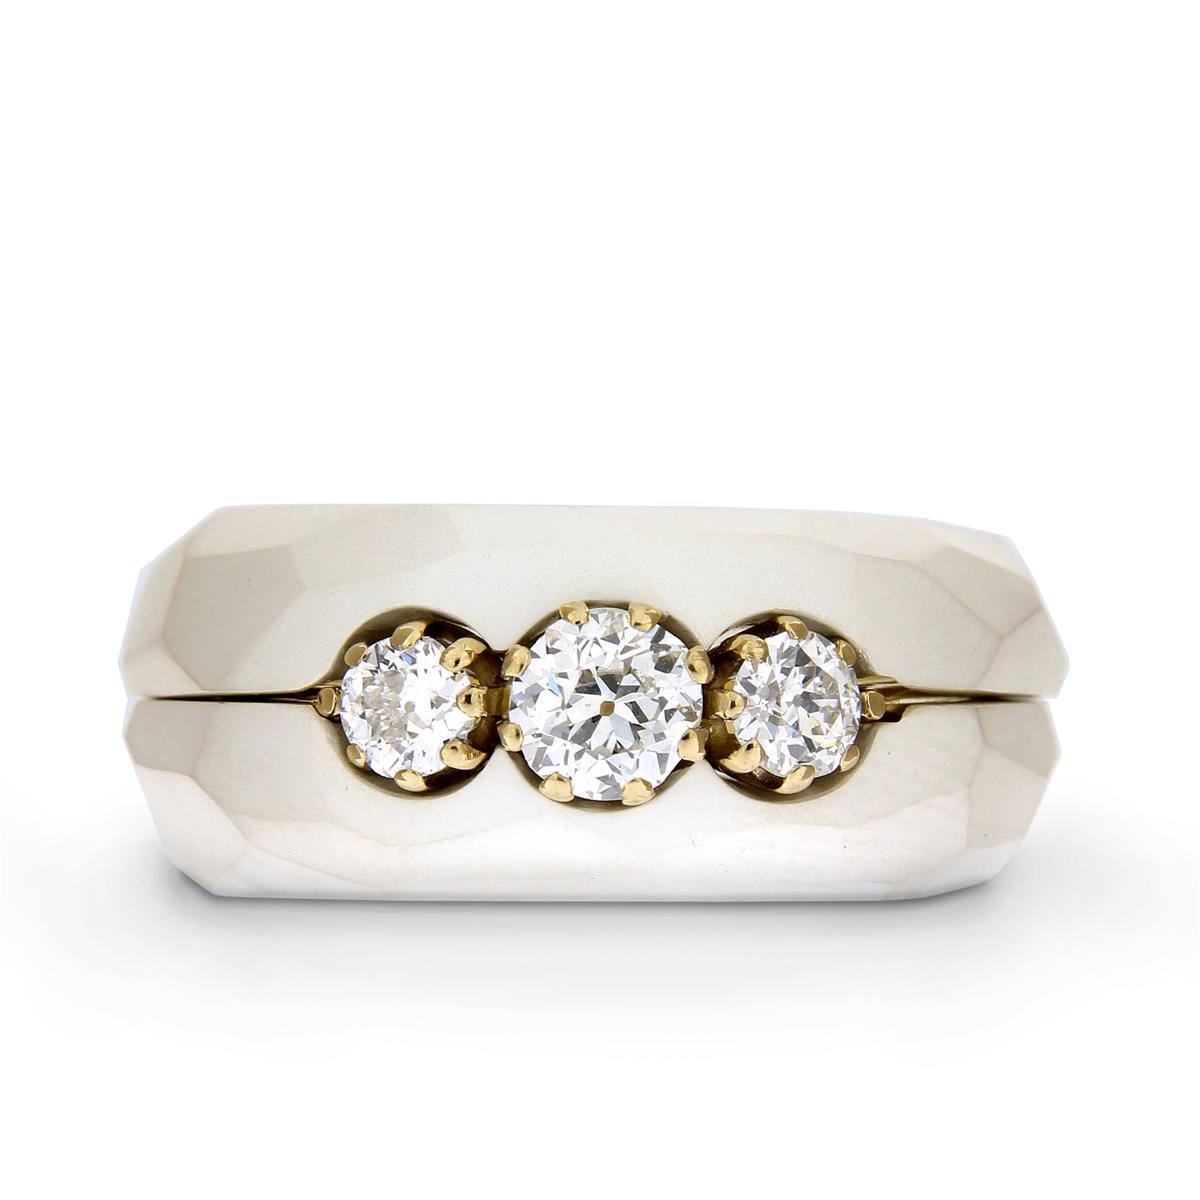 Katie g. Jewellery - Freisteller Ring Casing